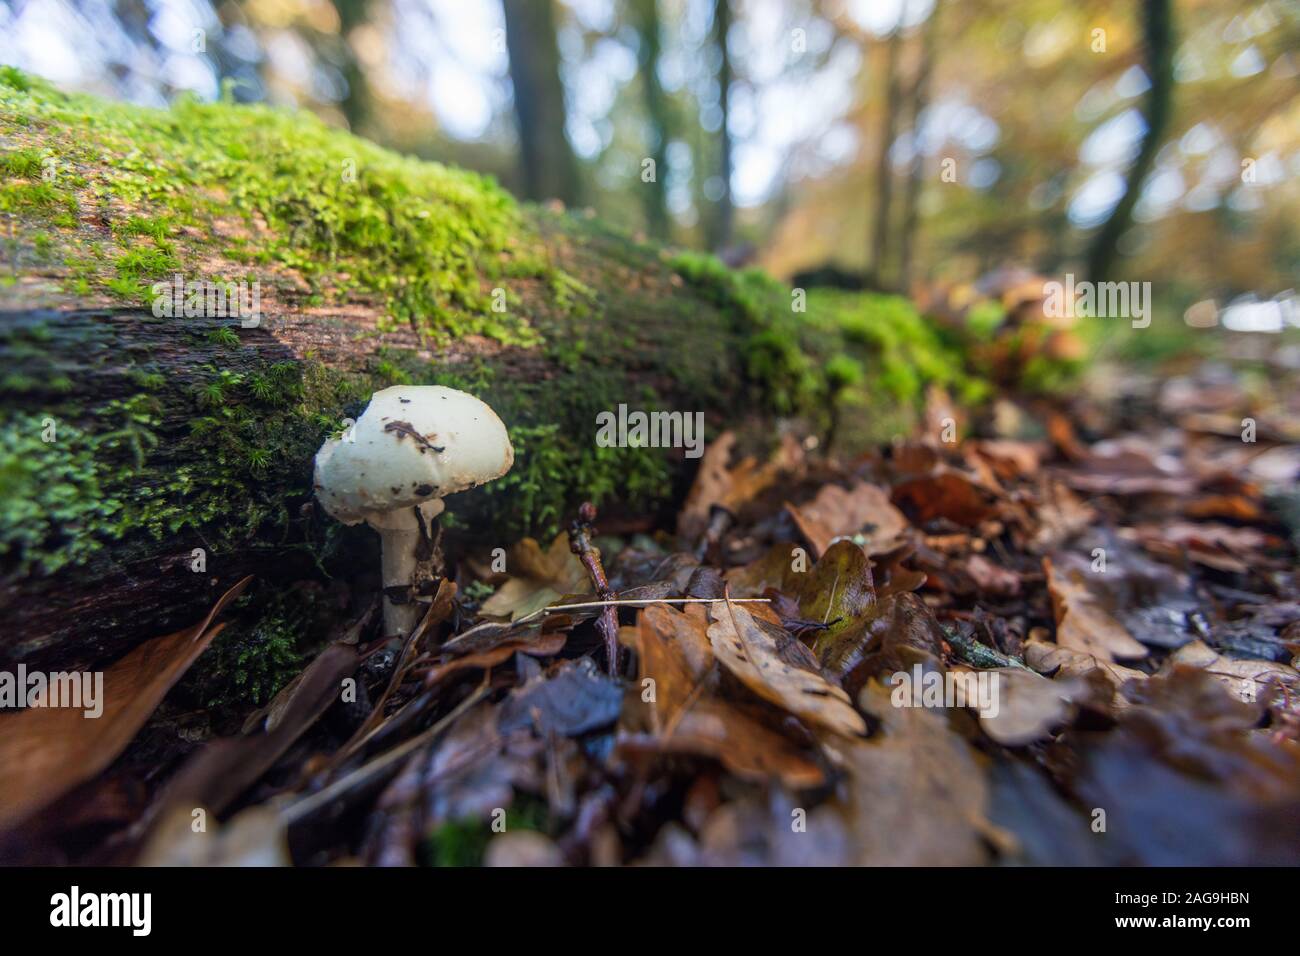 A single white mushroom near tree moss in dried leaves in the New Forest, near Brockenhurst, UK Stock Photo